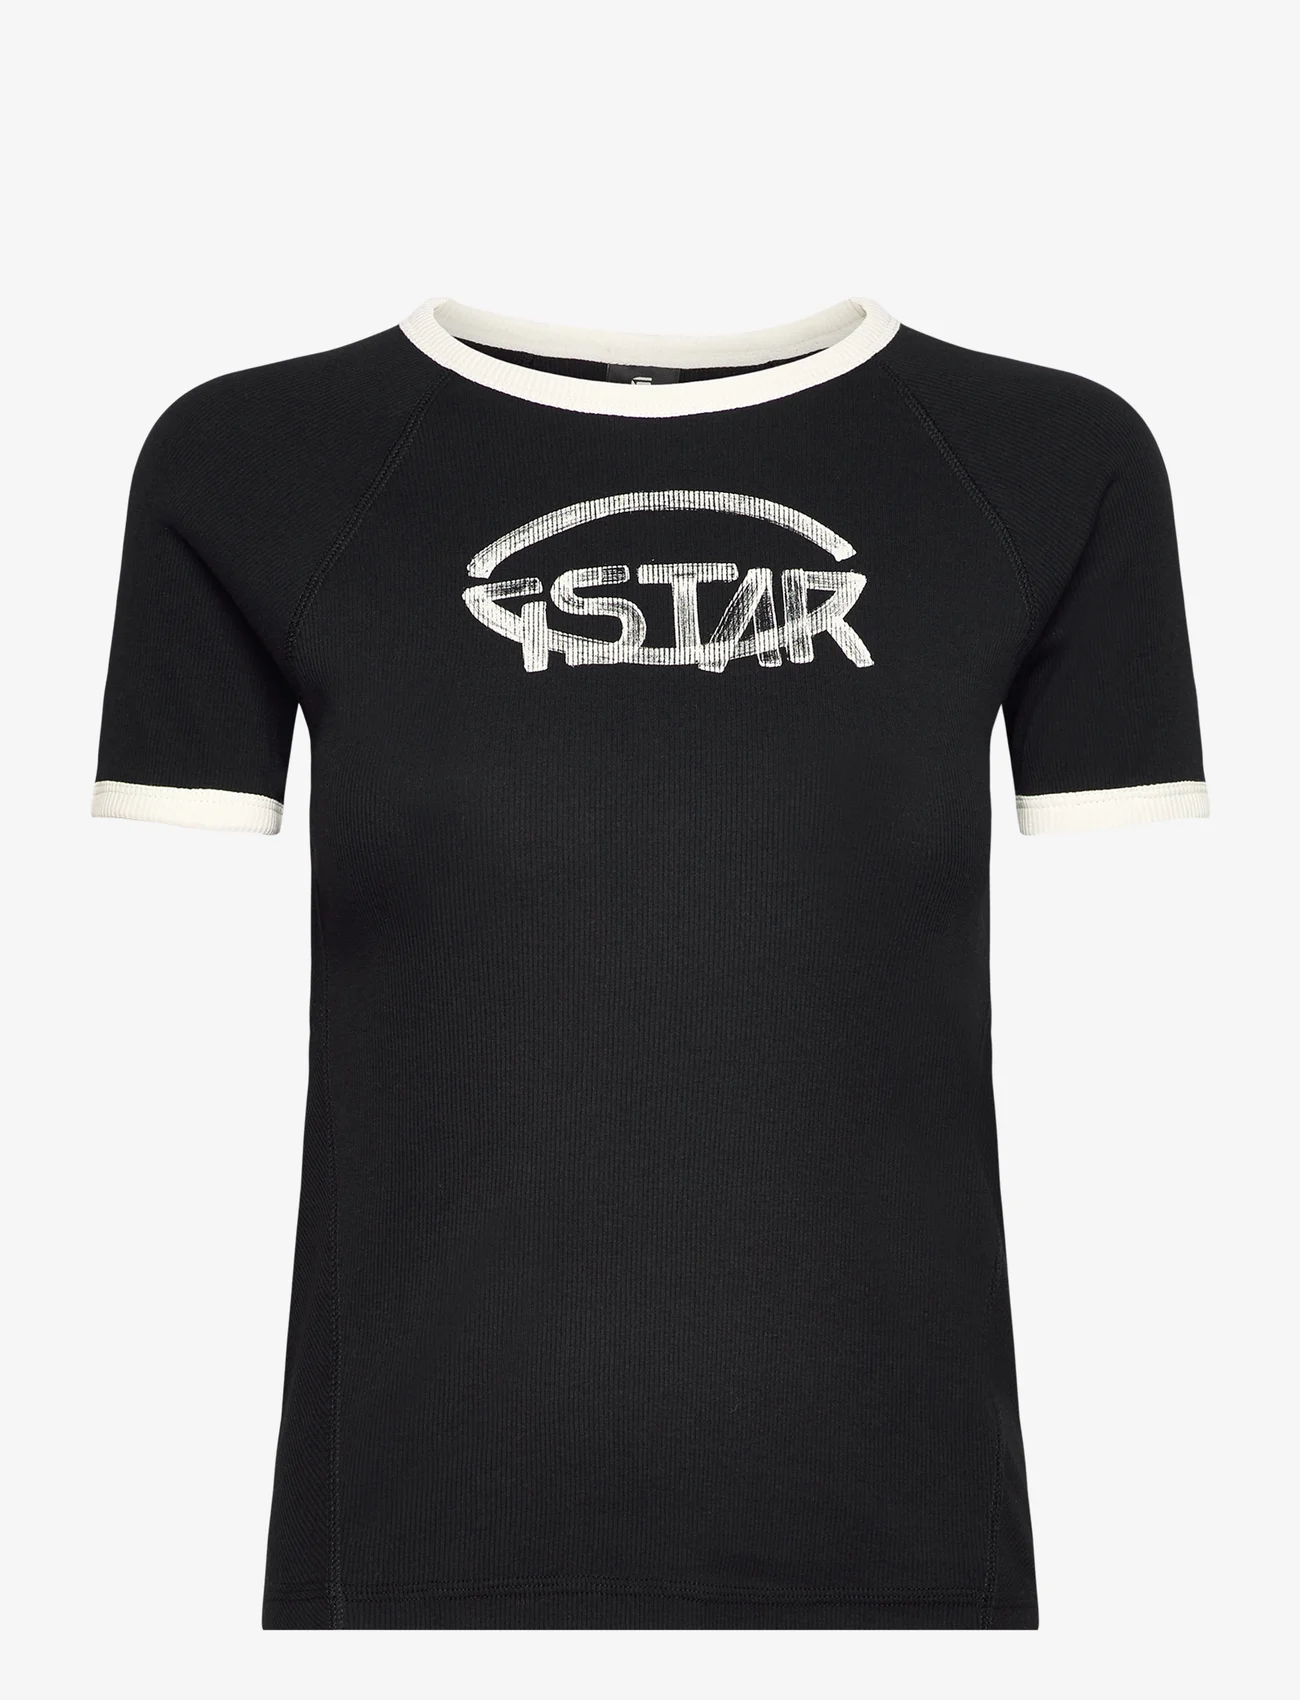 G-Star RAW - Army ringer slim r t wmn - t-shirts - dk black - 1